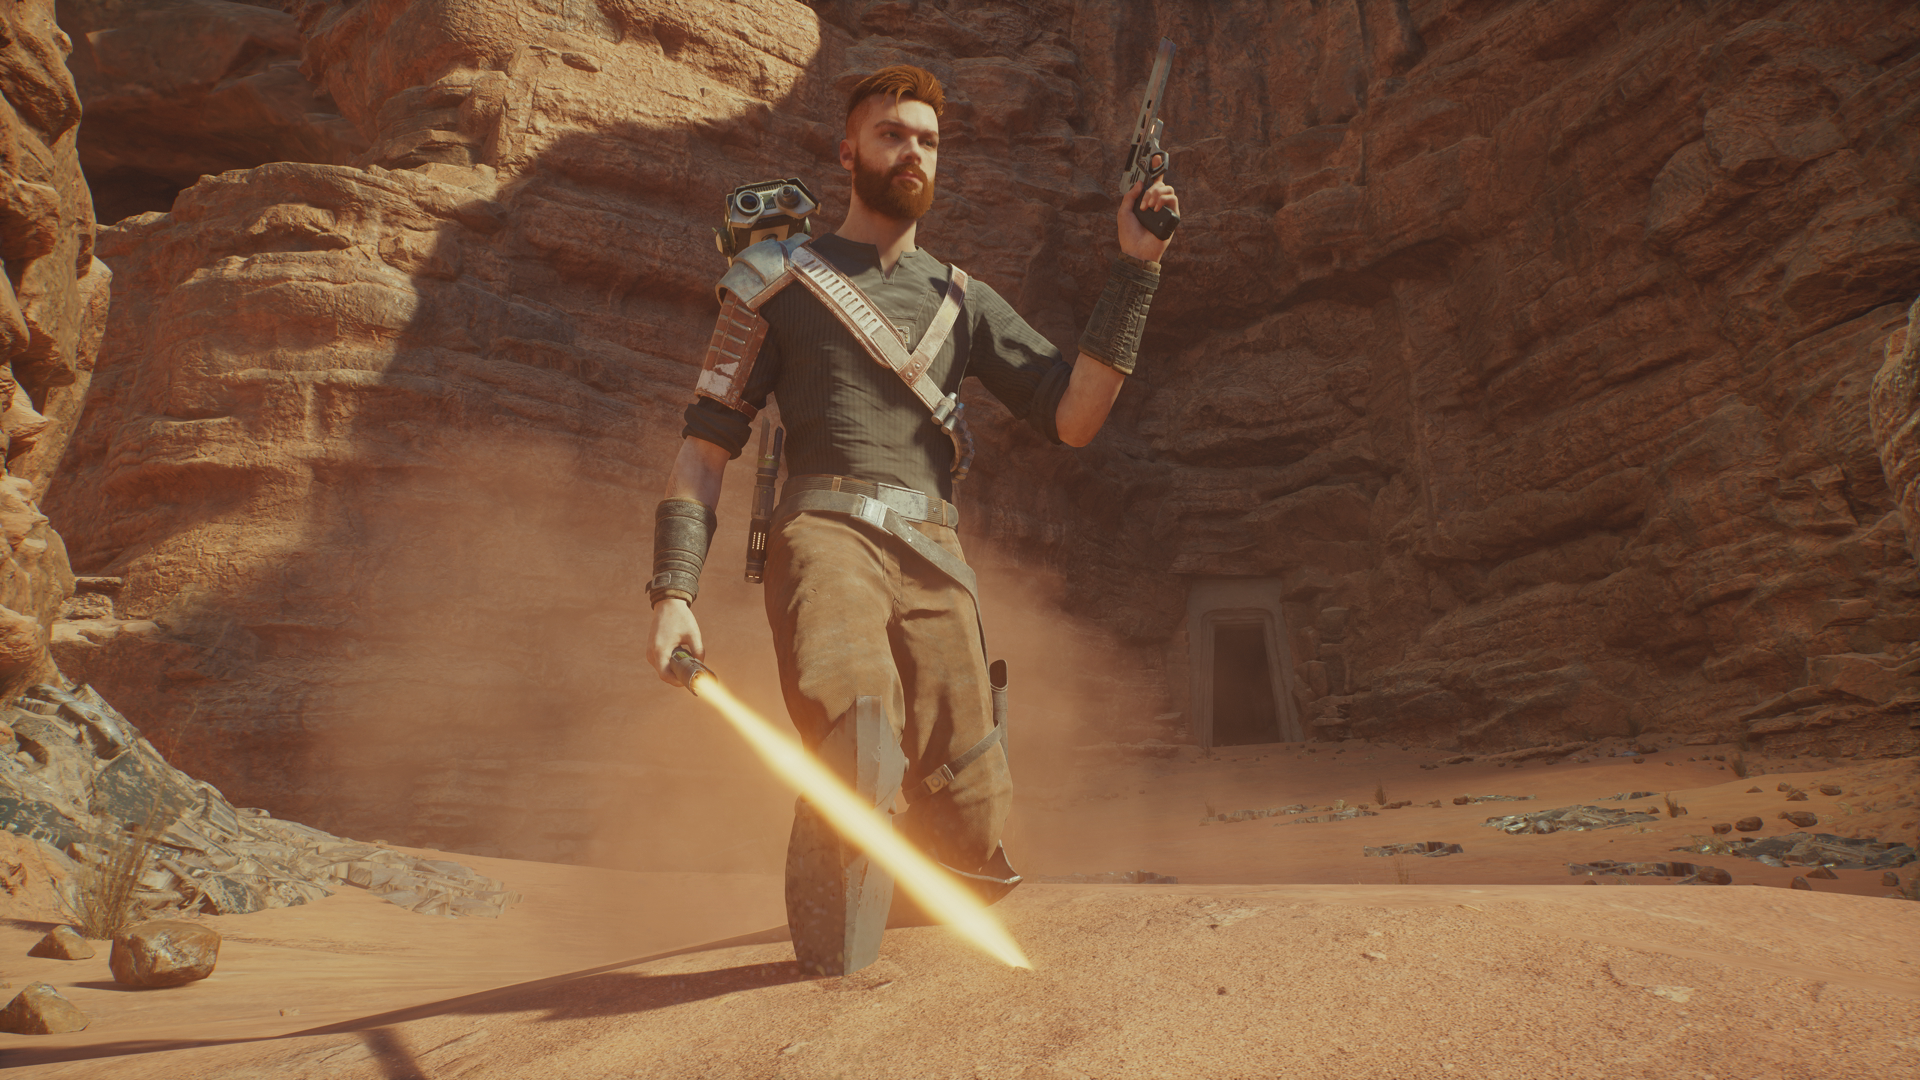 Star Wars Jedi: Survivor Cal Kestis standing in the sand of Jedha brandishing his lightsaber and blaster